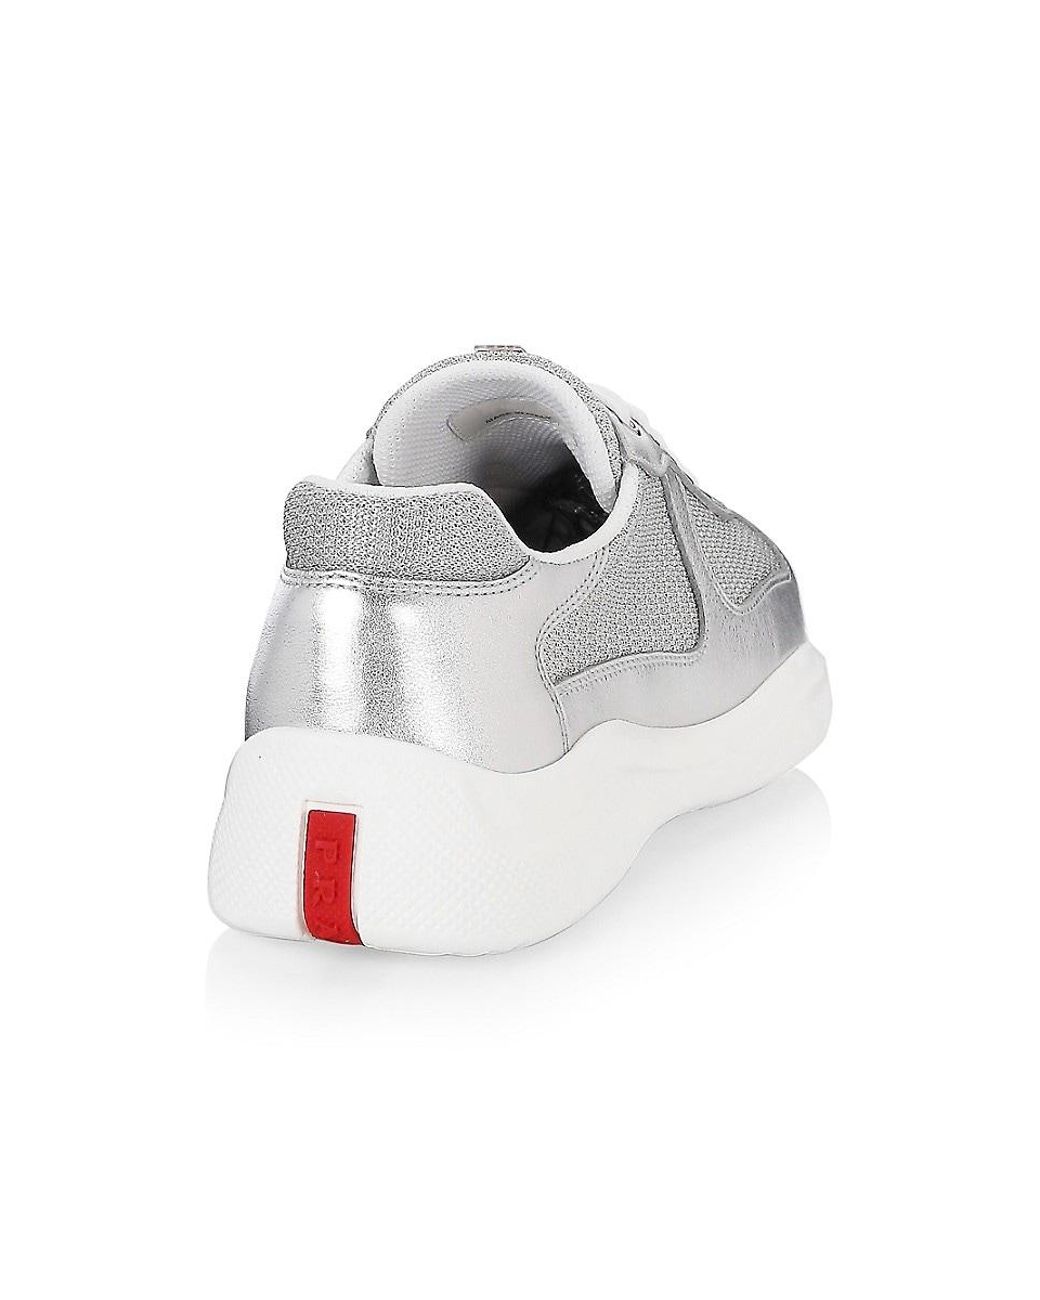 Prada Fabric Sneaker White/silver | Lyst